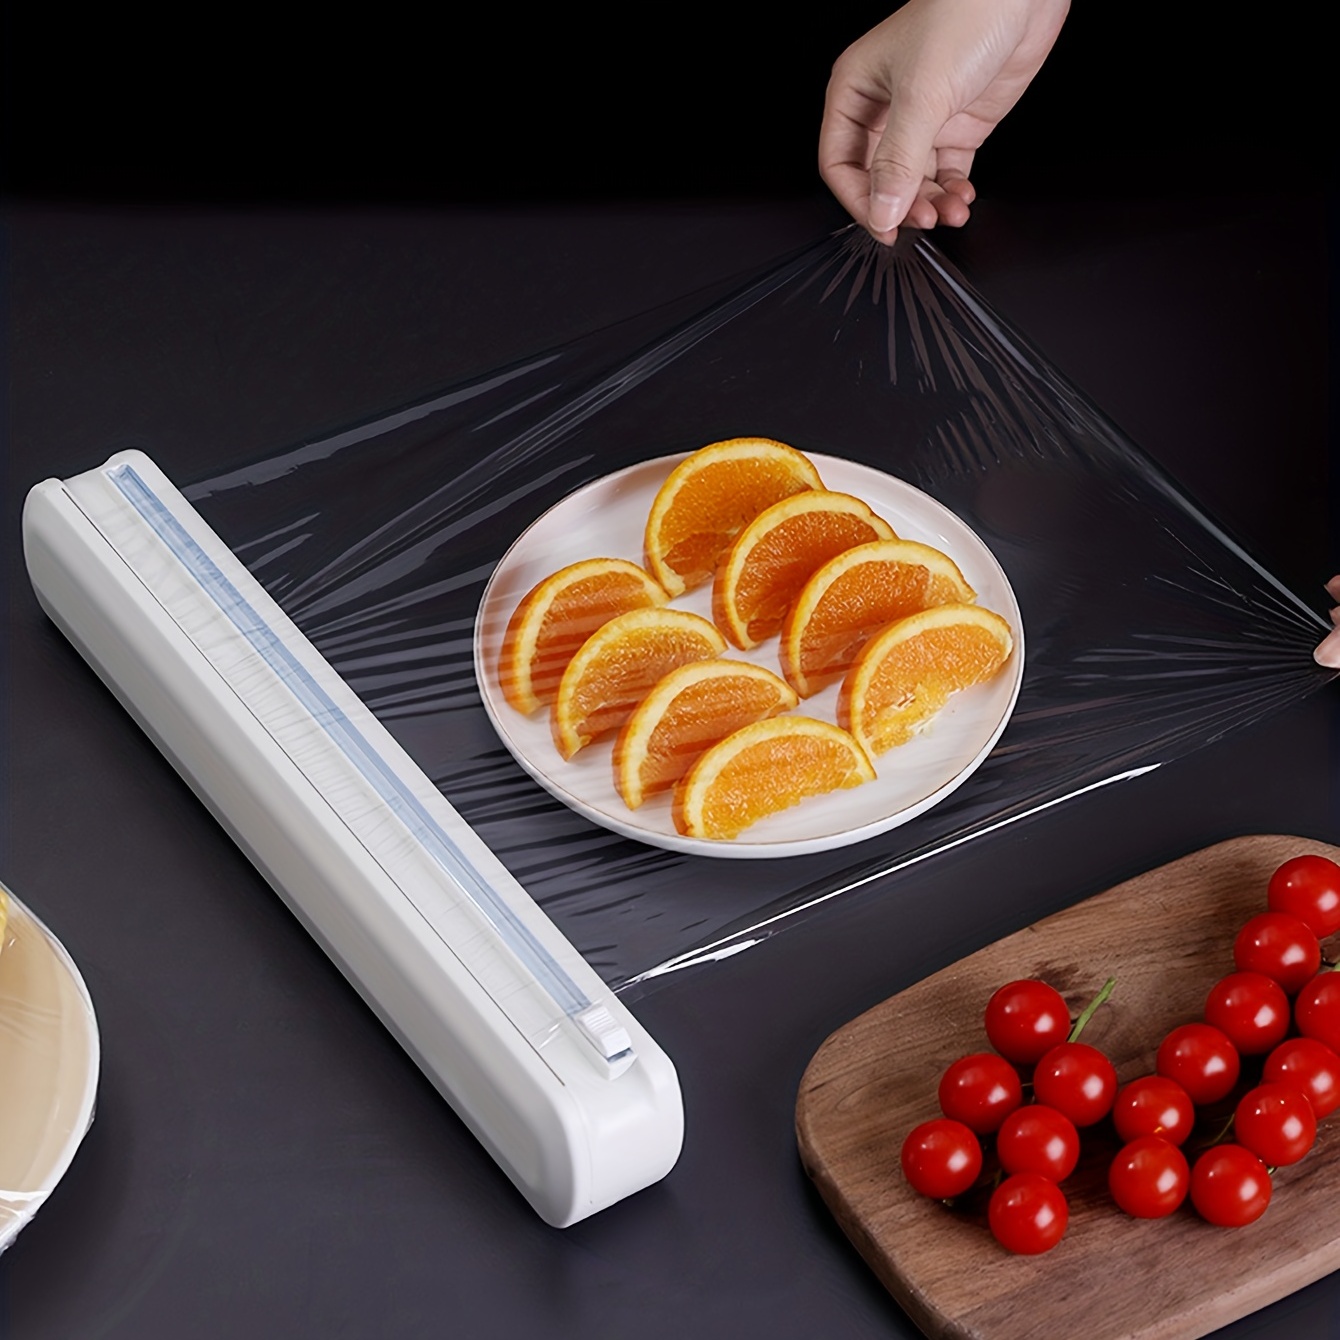 Food plastic wrap Slide Cutter 